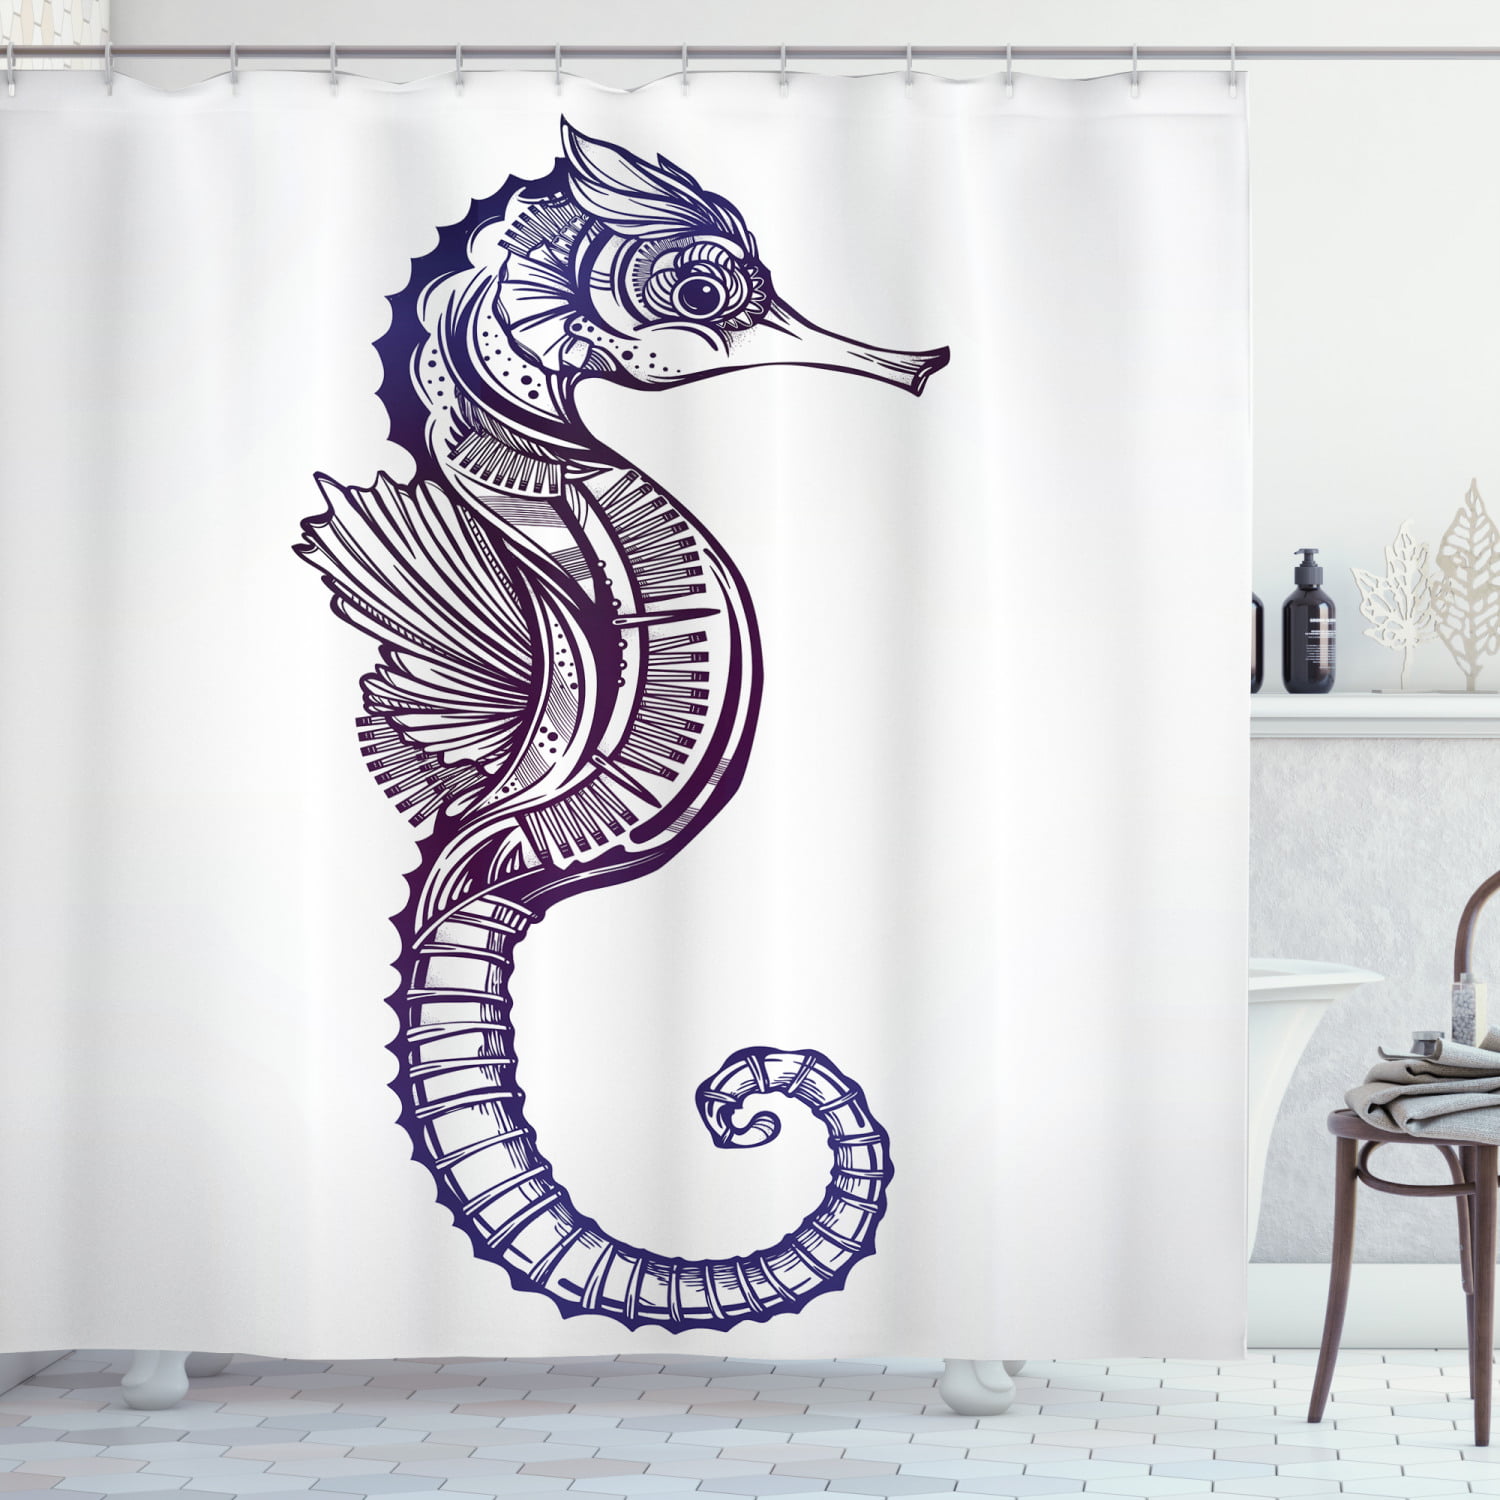 Seahorse Shower Curtain Ocean Animal Fabric Bathroom Decor with Hooks 72x72 in 